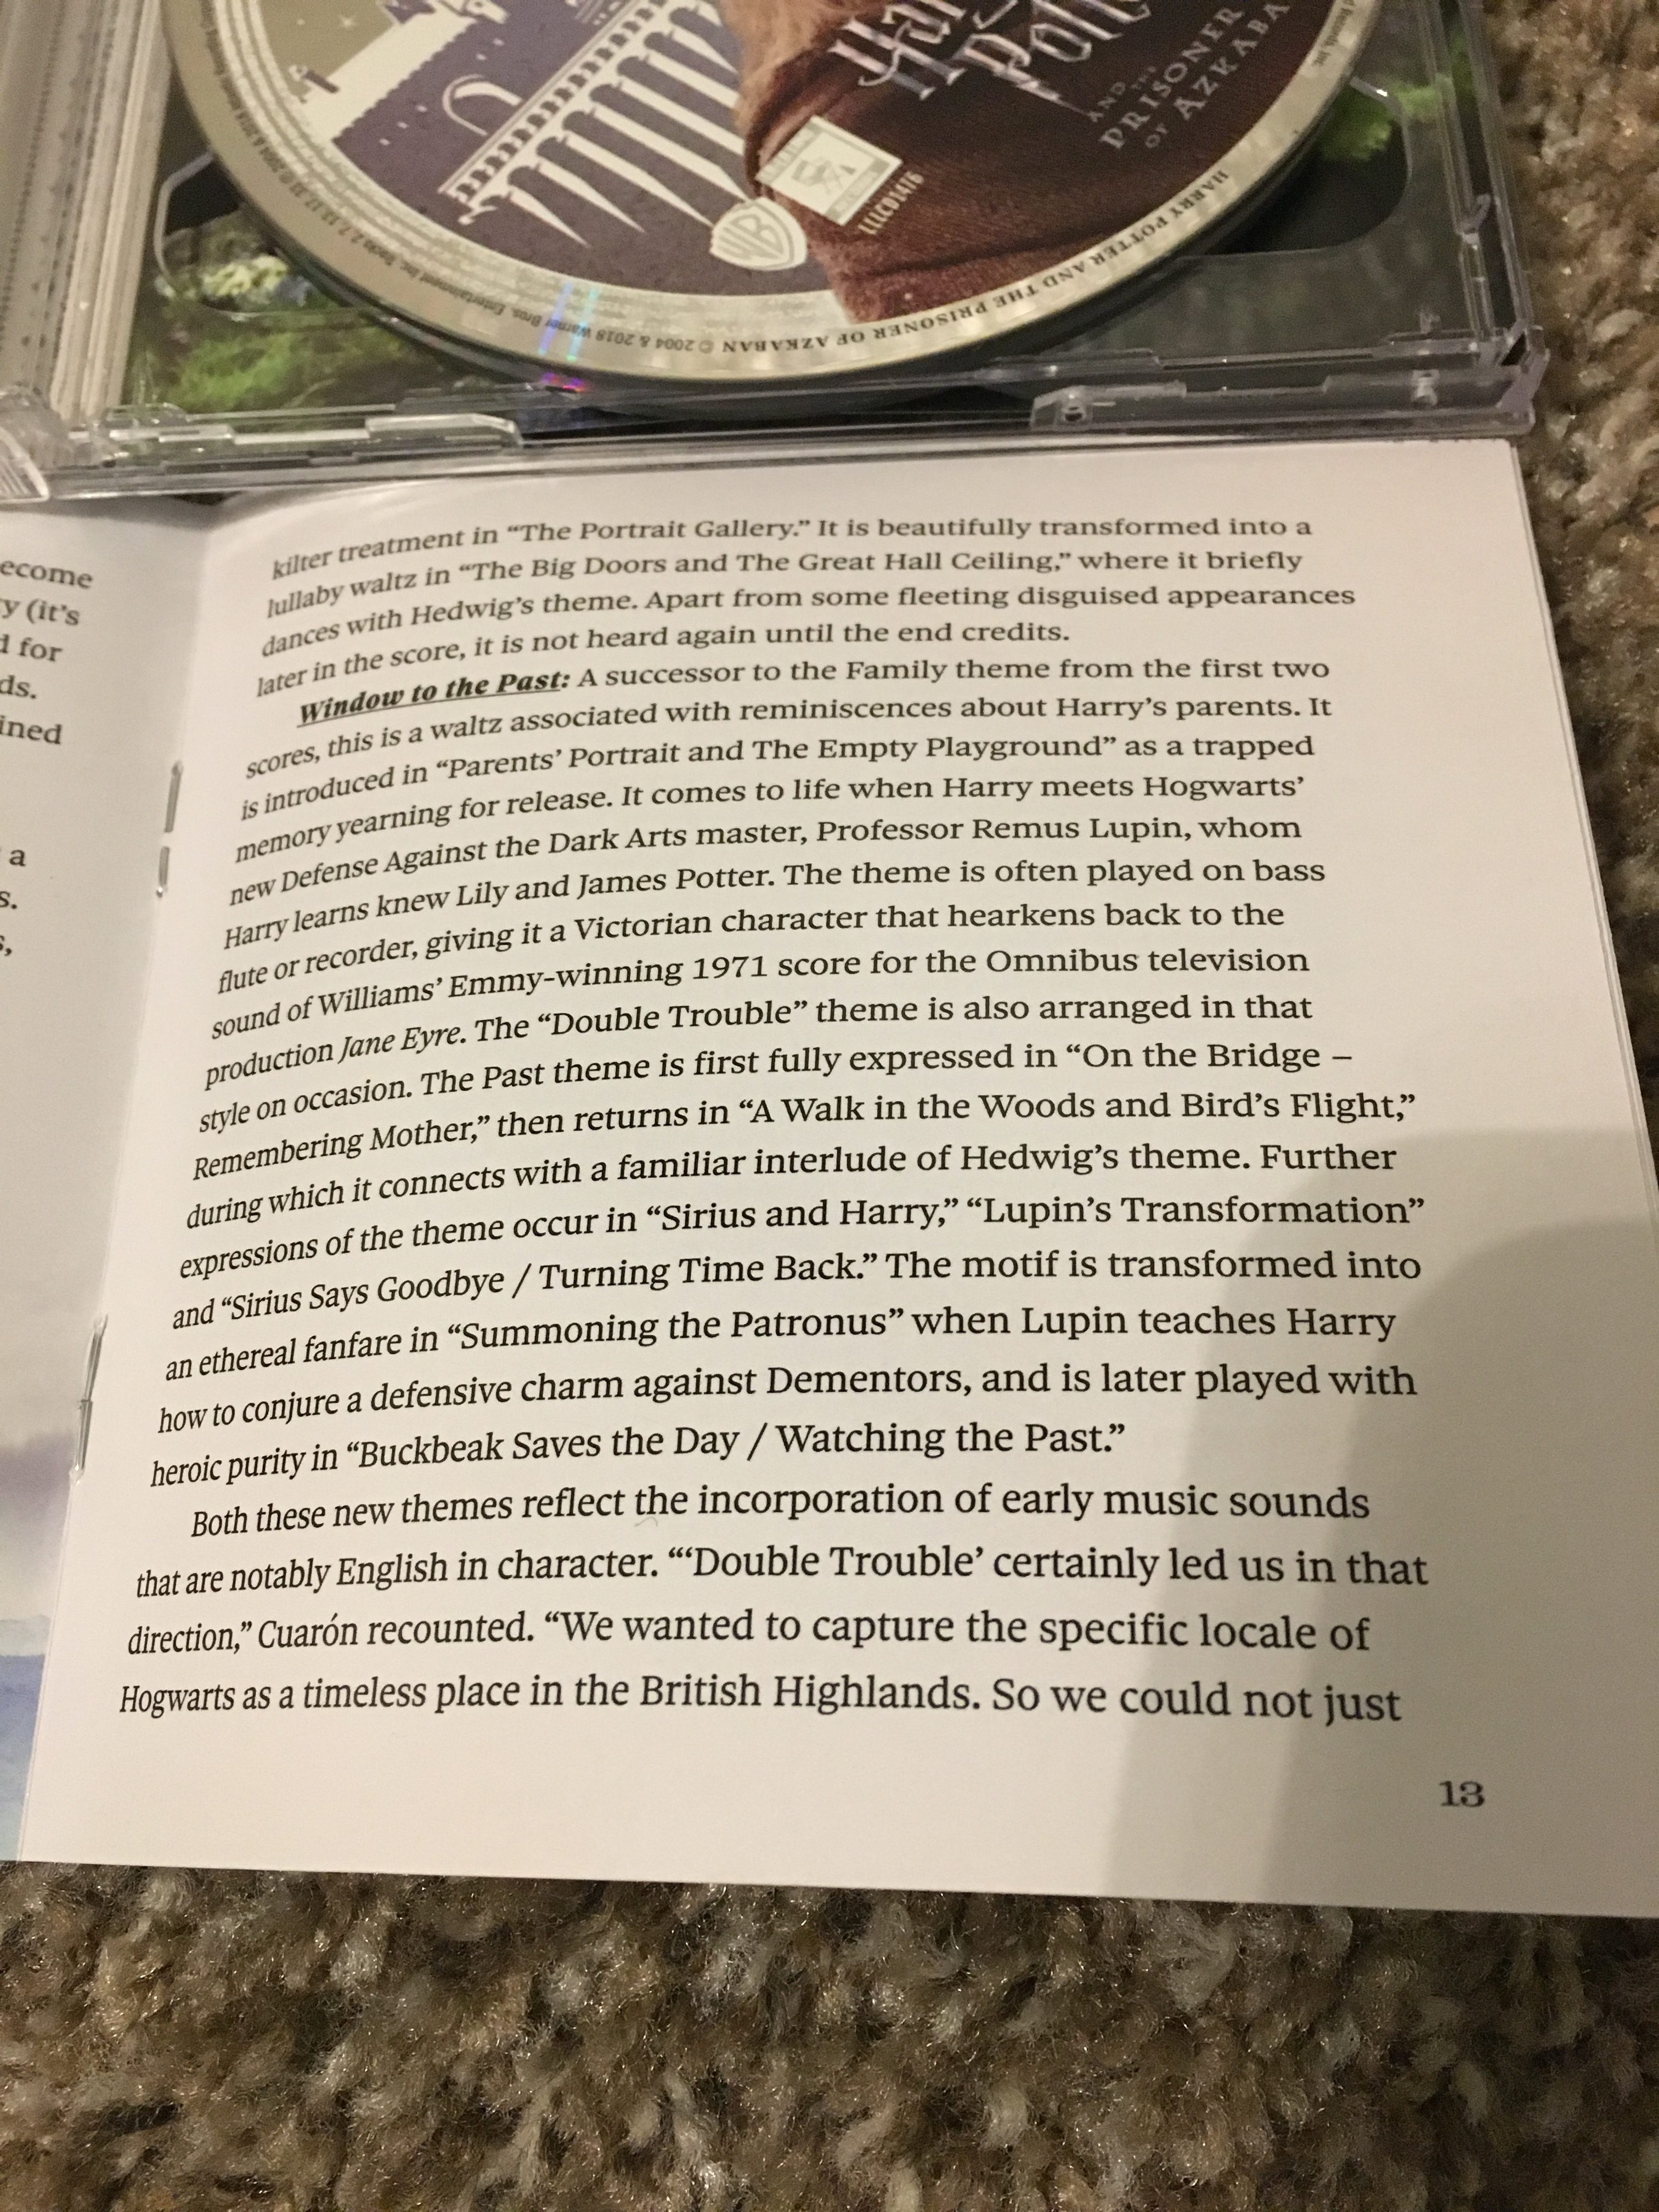 “Harry Potter: The John Williams Soundtrack Collection”, “Prisoner of Azkaban” liner notes